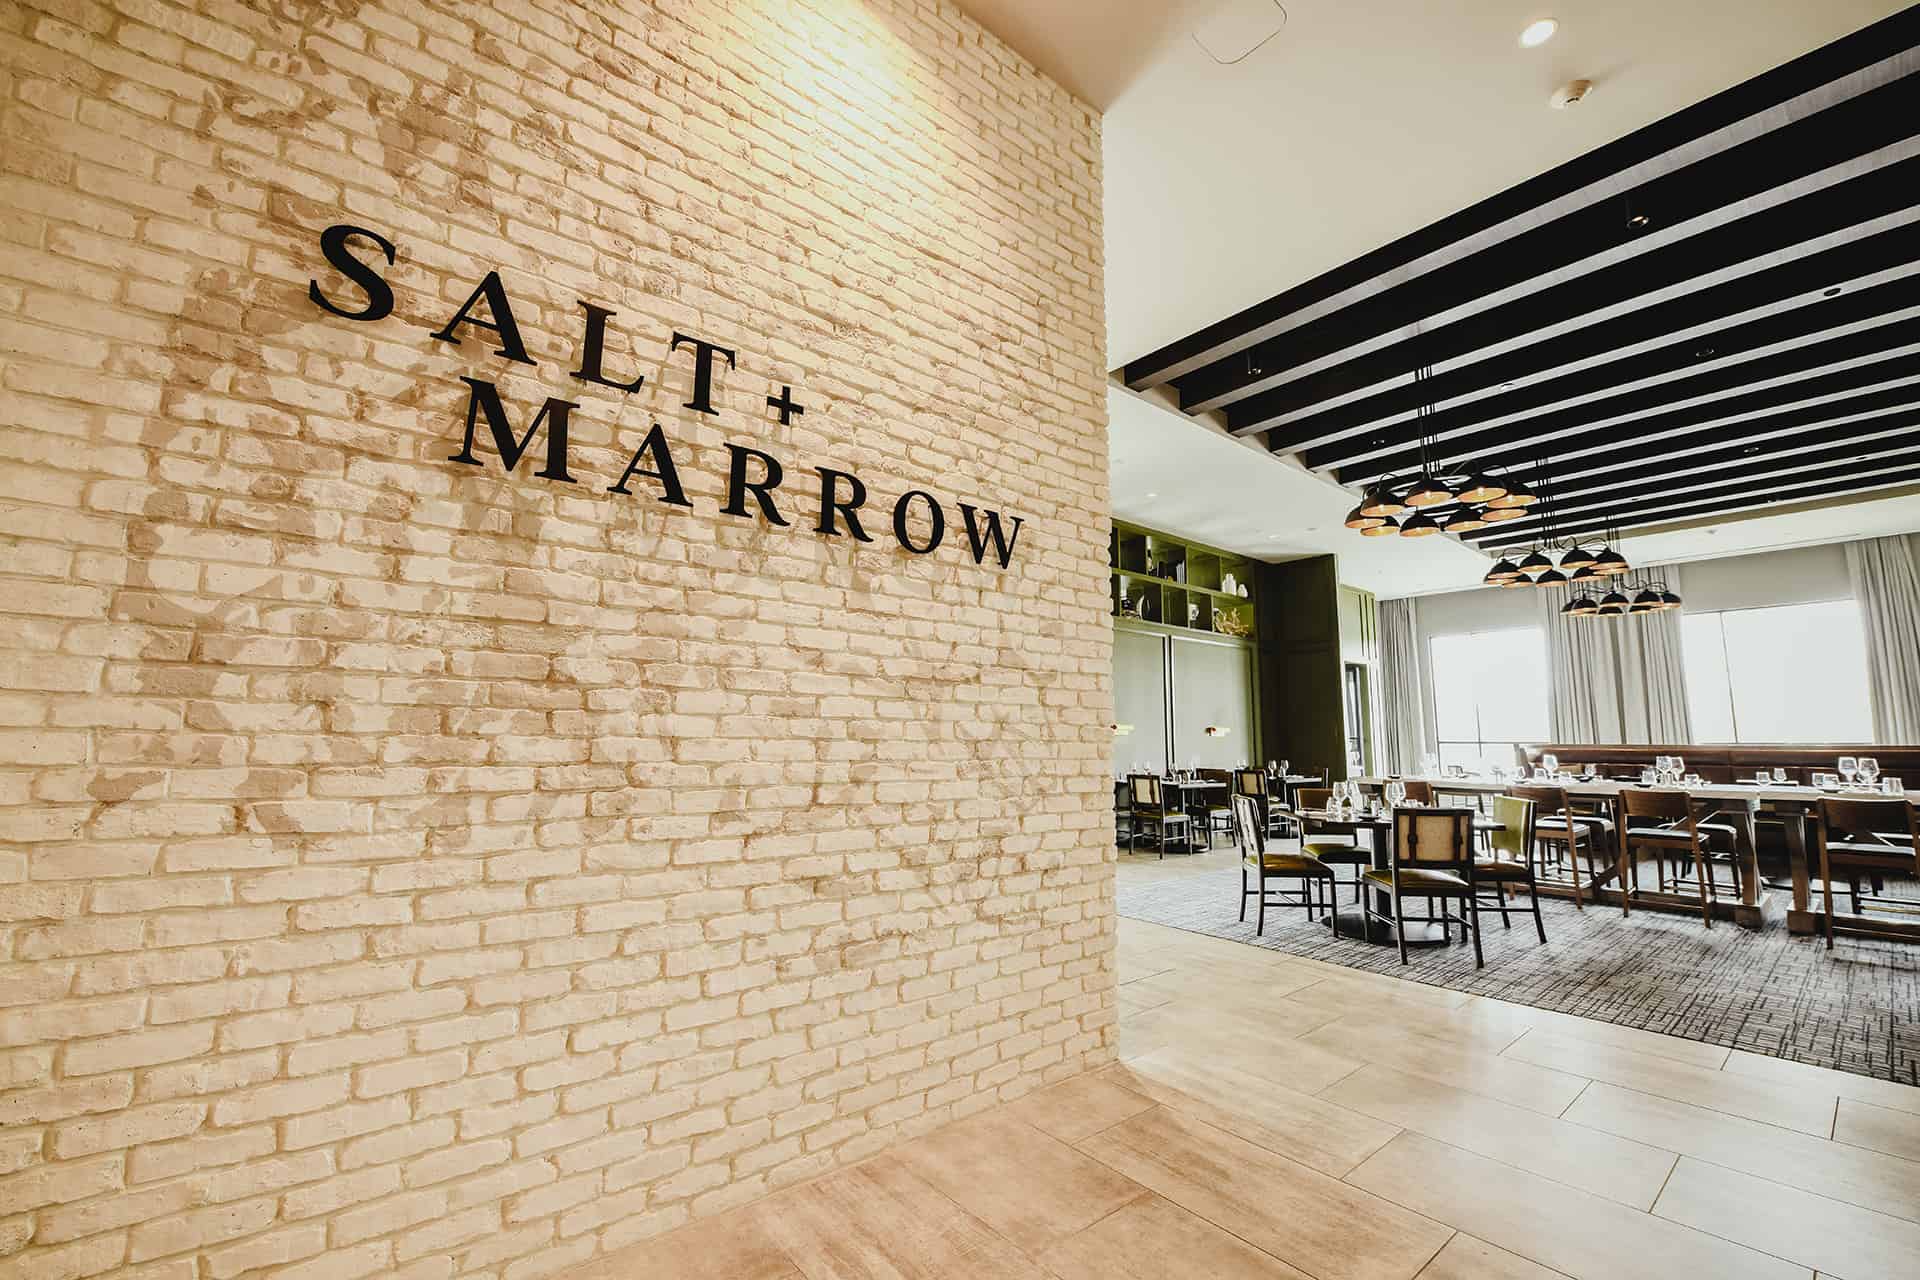 Salt & Marrow restaurant branding and F&B concept development for Crowne Plaza in North Augusta, South Carolina